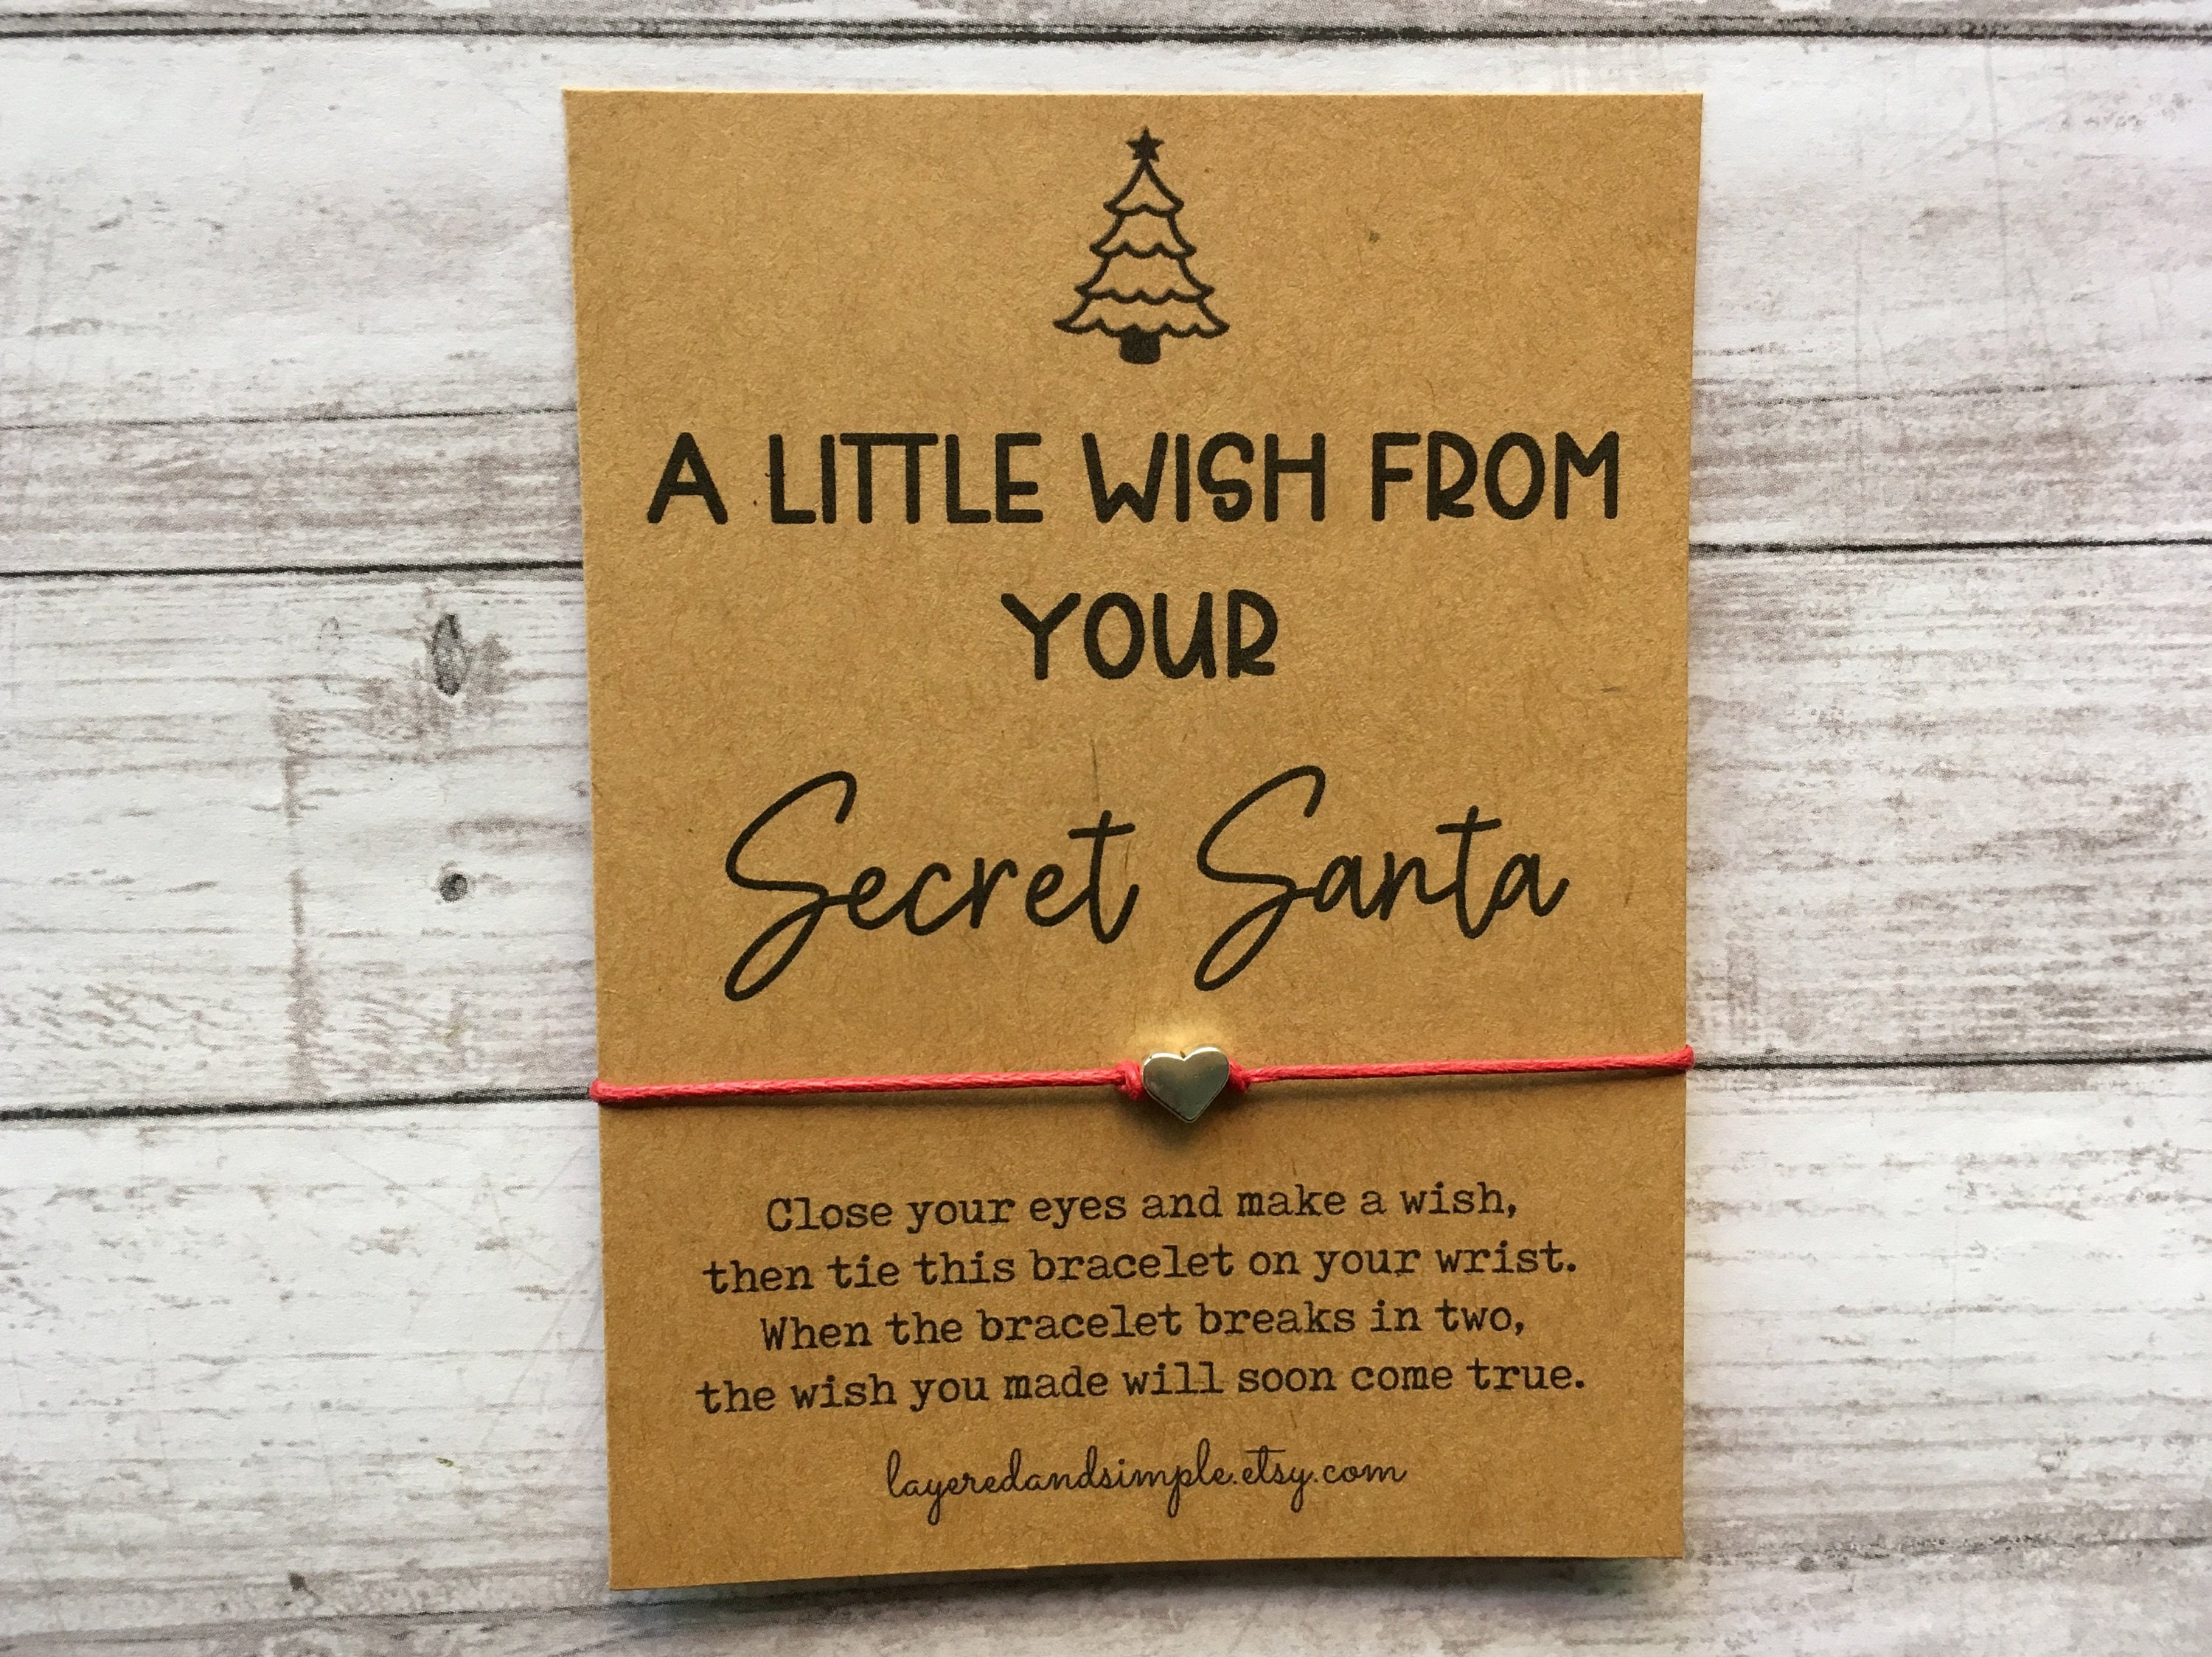 Secret Santa Wish Bracelet, Christmas Gift Co-Worker,5 Dollar Gift,Gifts Under 5 Dollars,5 Dollar Bracelet,Wish Bracelet Friend